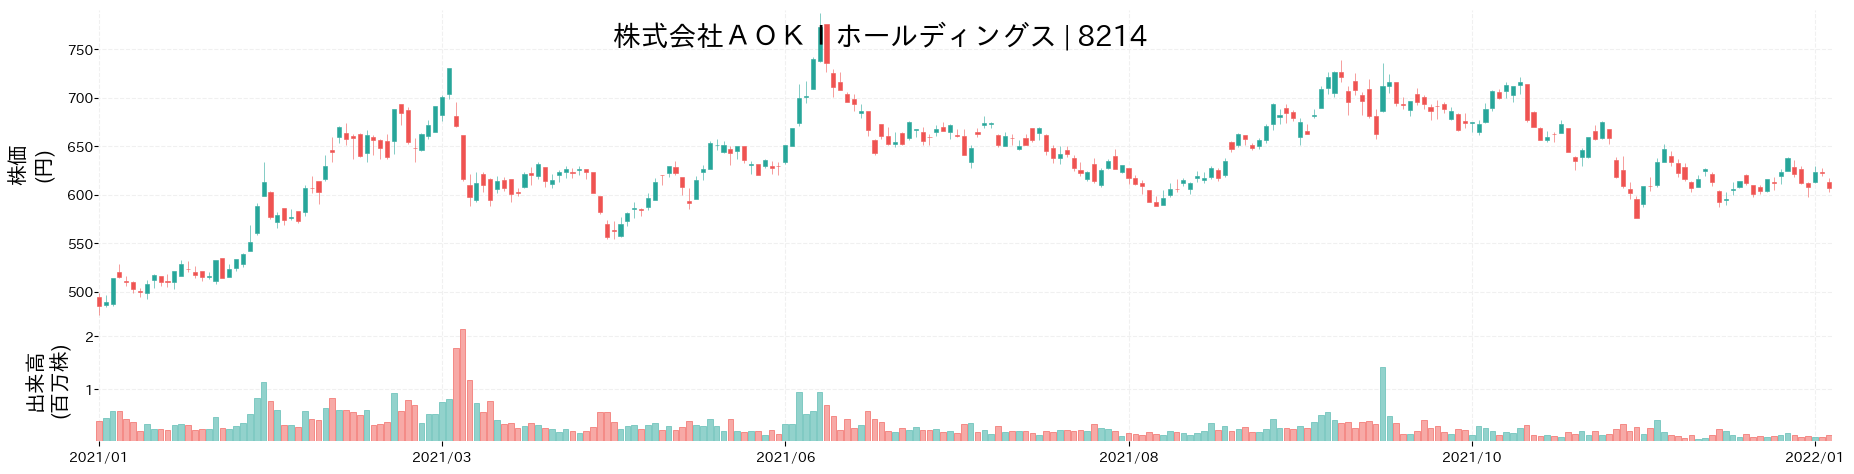 AOKIホールディングスの株価推移(2021)